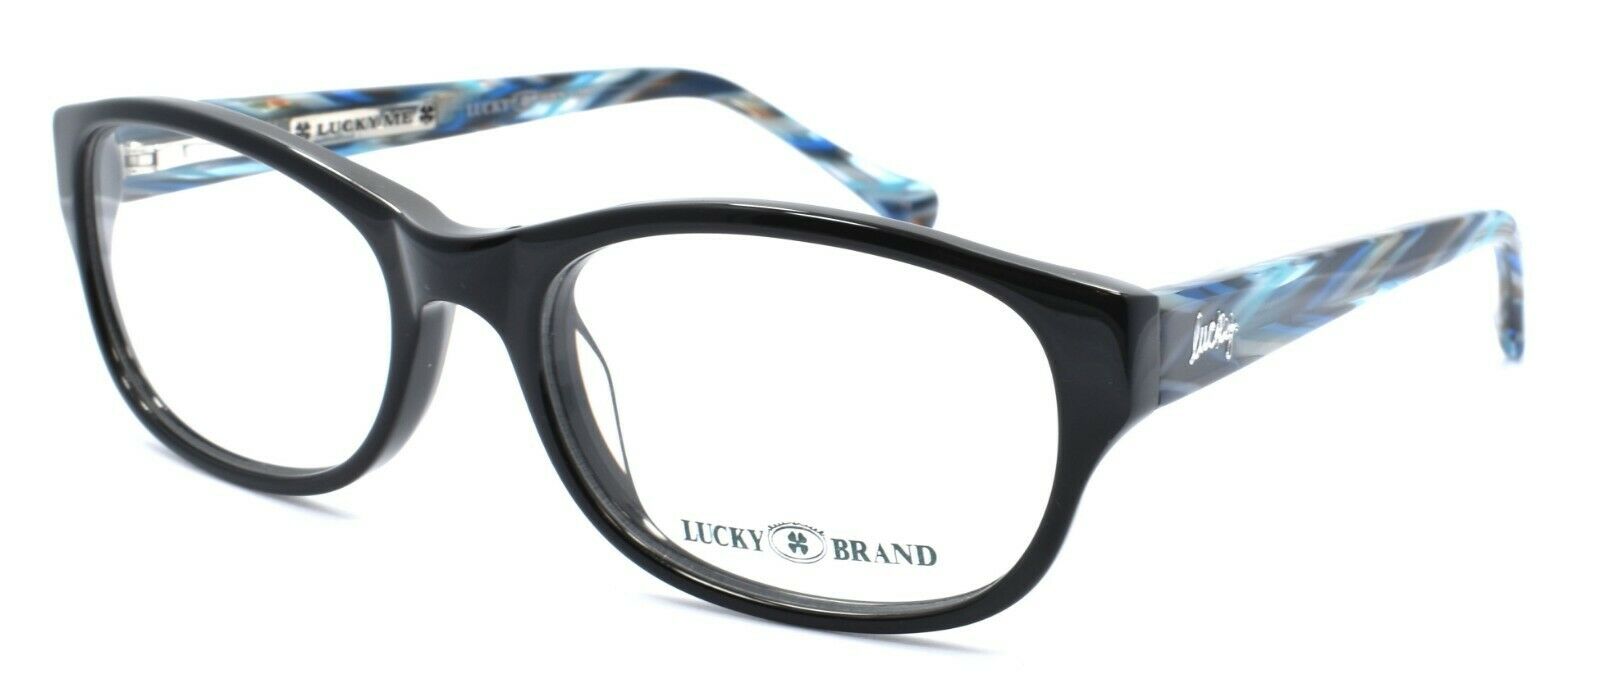 1-LUCKY BRAND Busy Bee Women's Eyeglasses Frames PETITE 49-16-130 Black + CASE-751286246391-IKSpecs